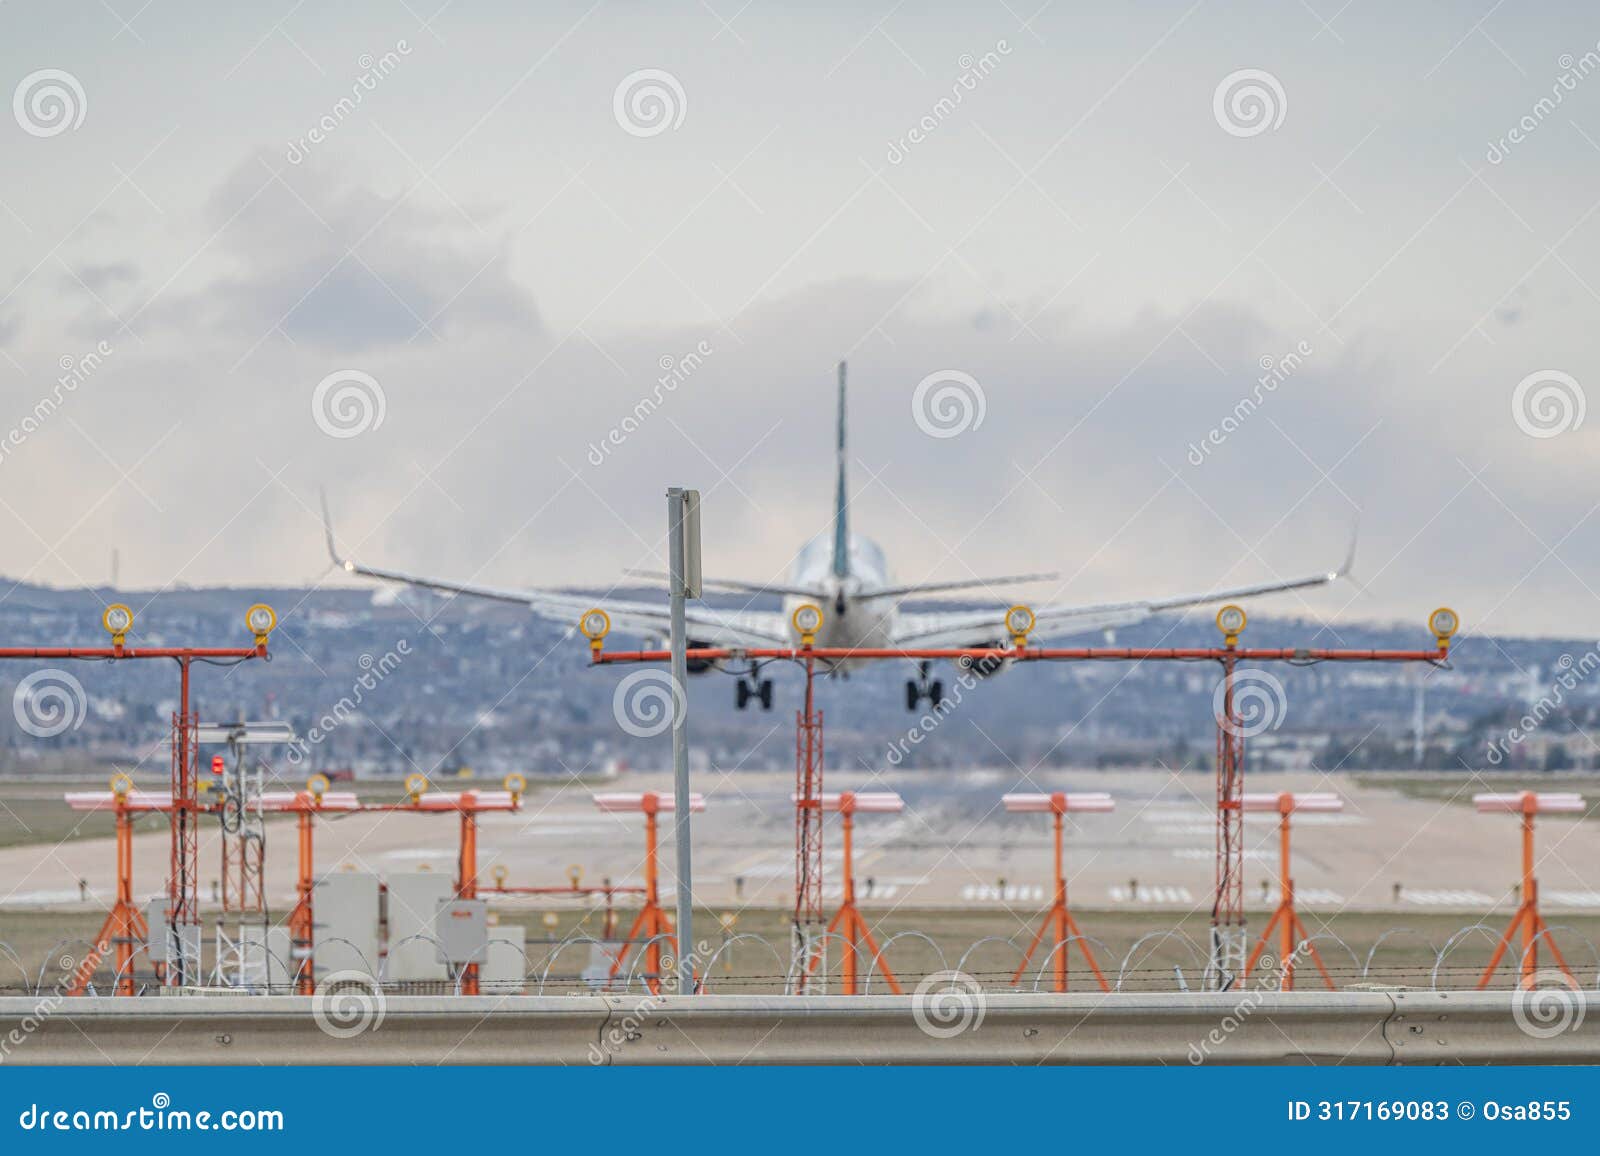 airplane jetliner arriving at airport runway